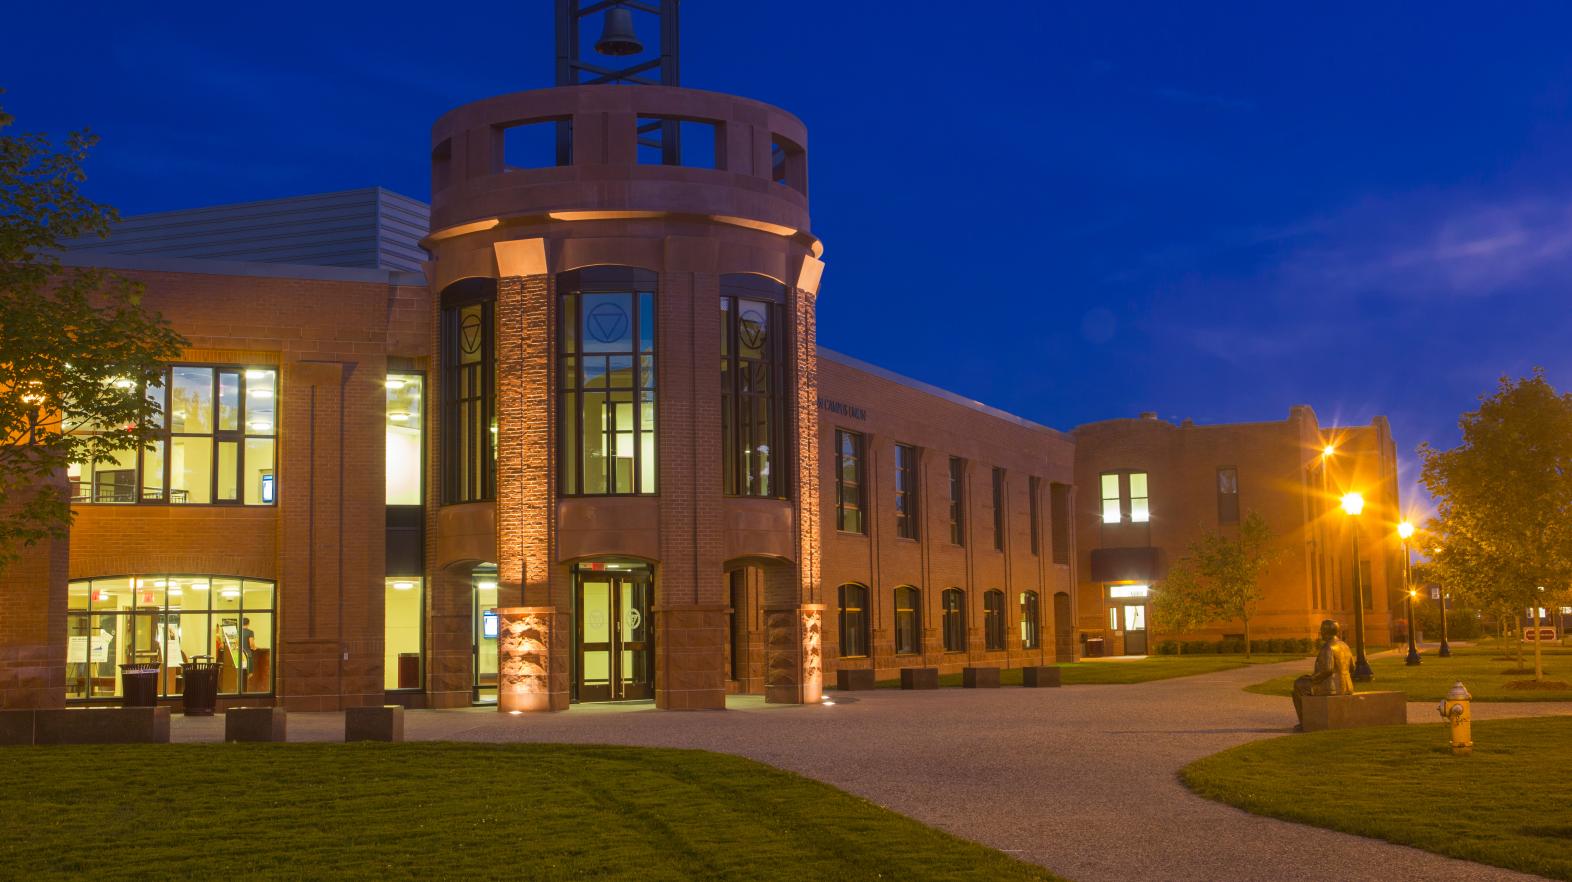 Flynn Campus Union at night